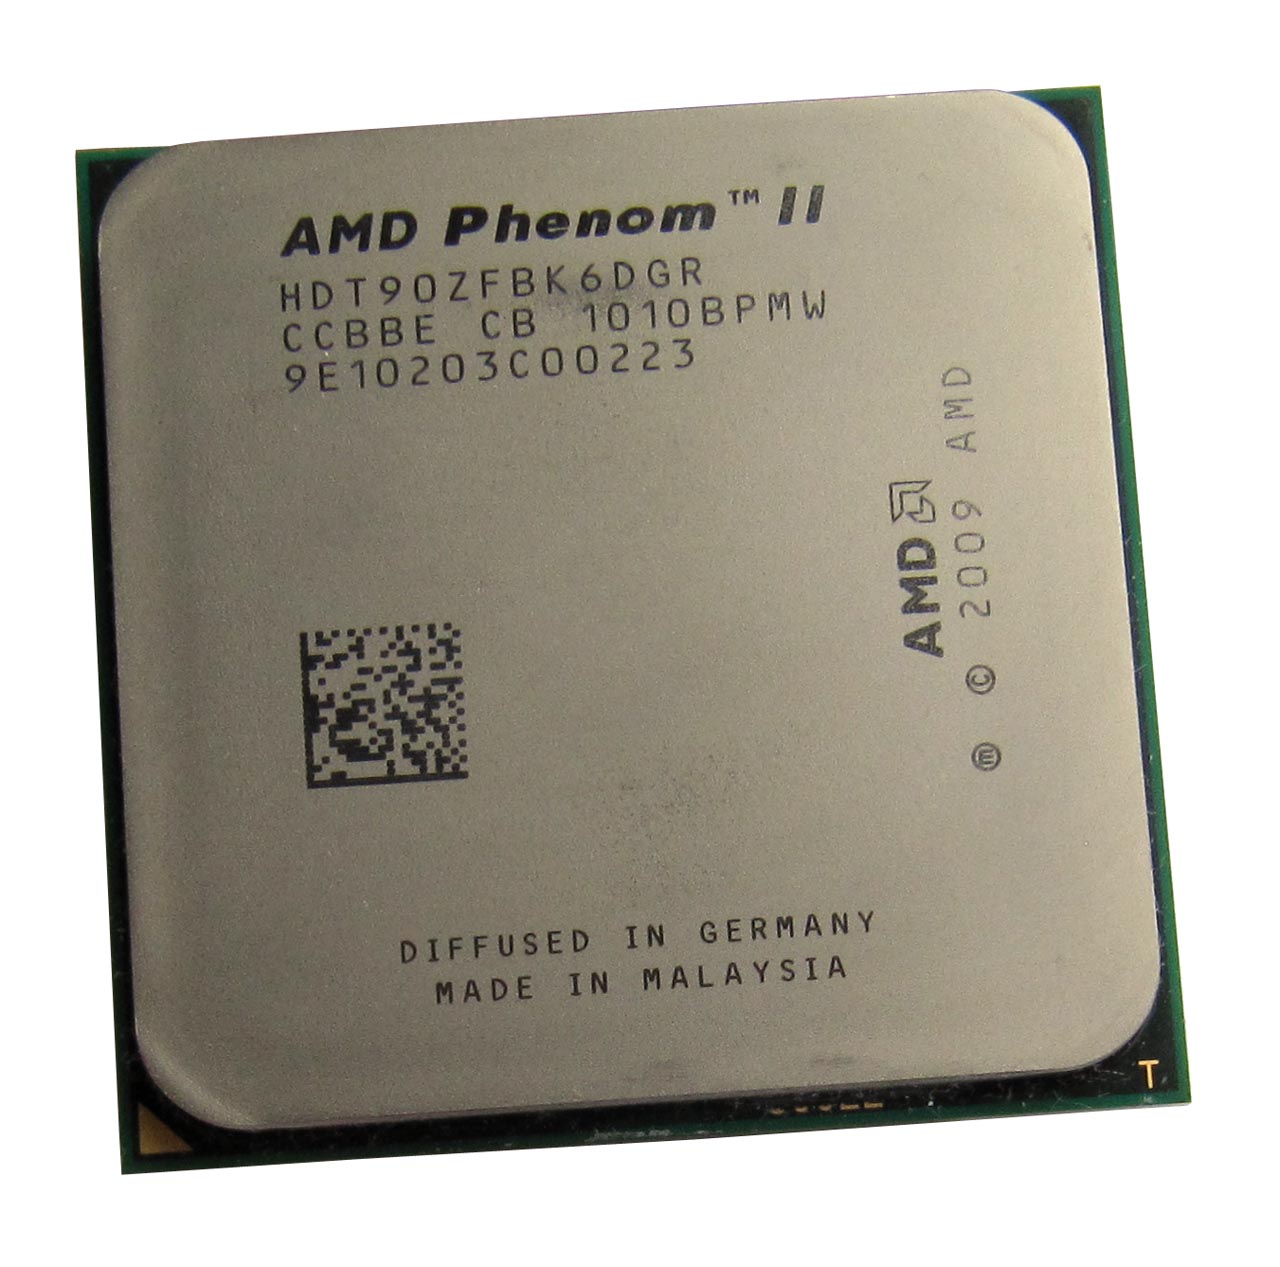 Athlon 650. AMD Athlon II x2 260. Процессор AMD Athlon adx2600ck. Процессор AMD Athlon x4 845. AMD Athlon(TM) x2 260 Processor 3 20 GHZ.